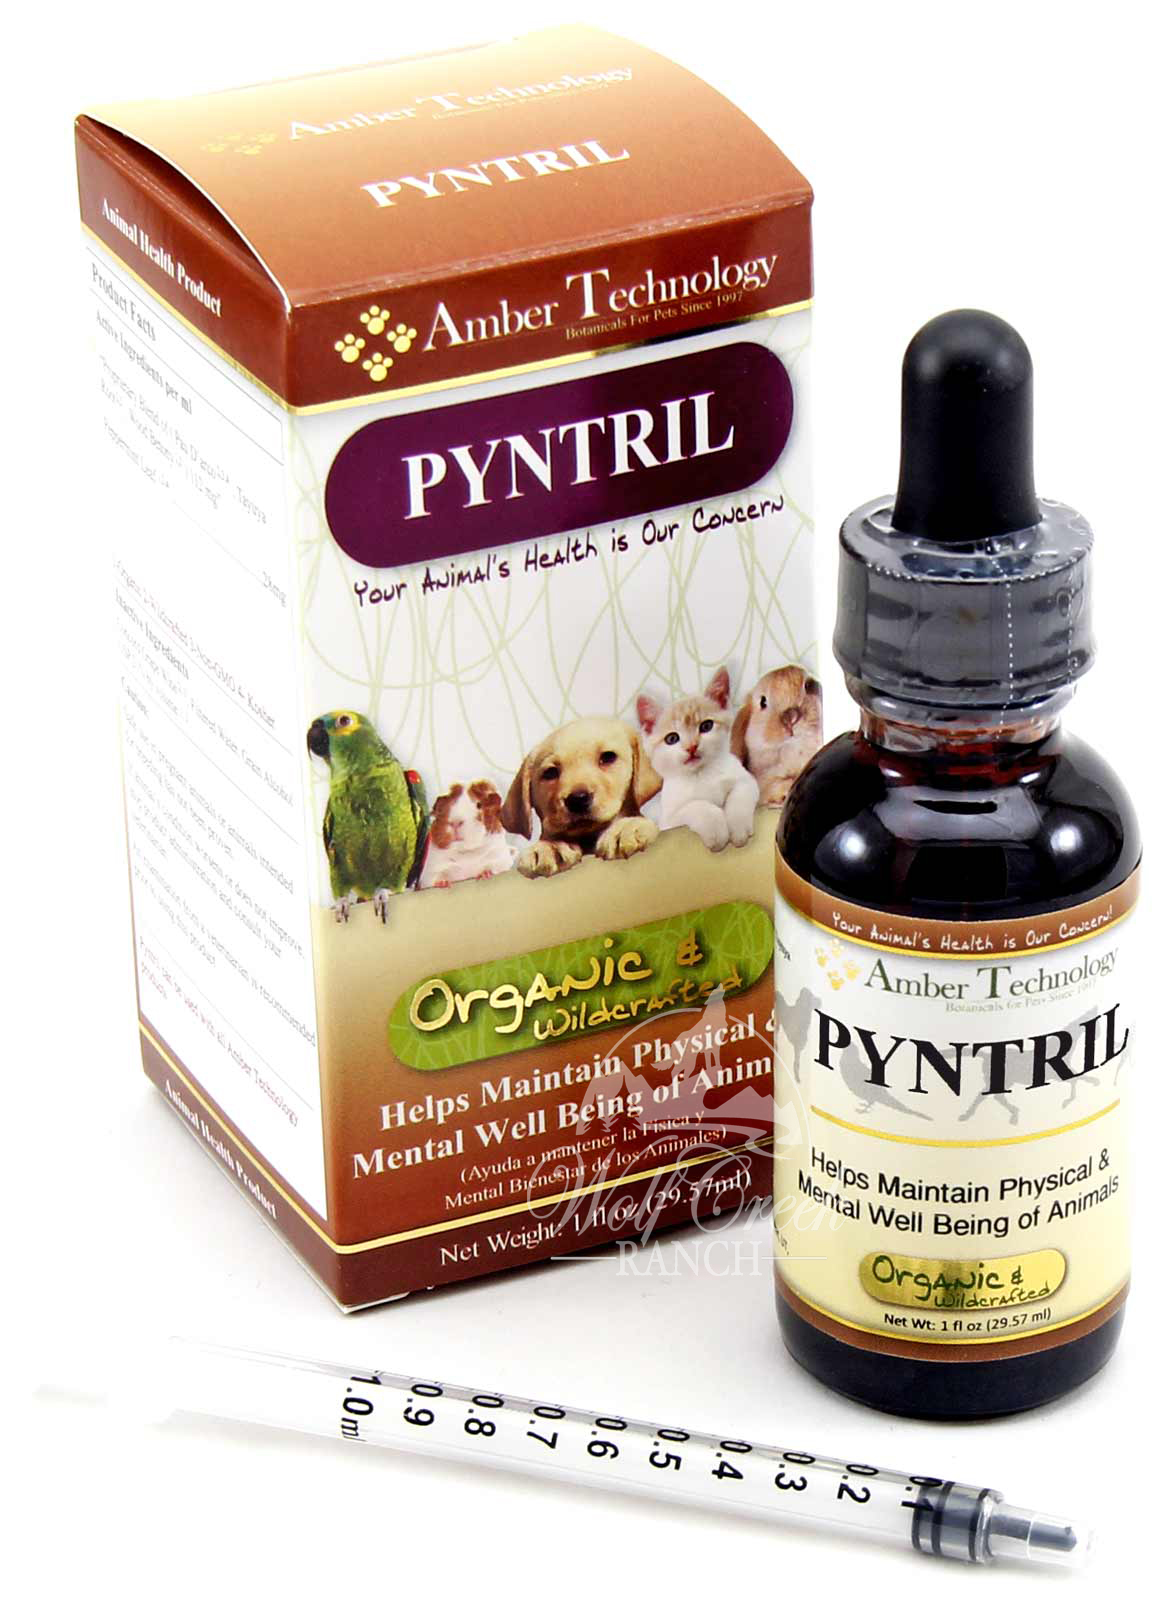 Pyntril is an organic natural pet calming aid.